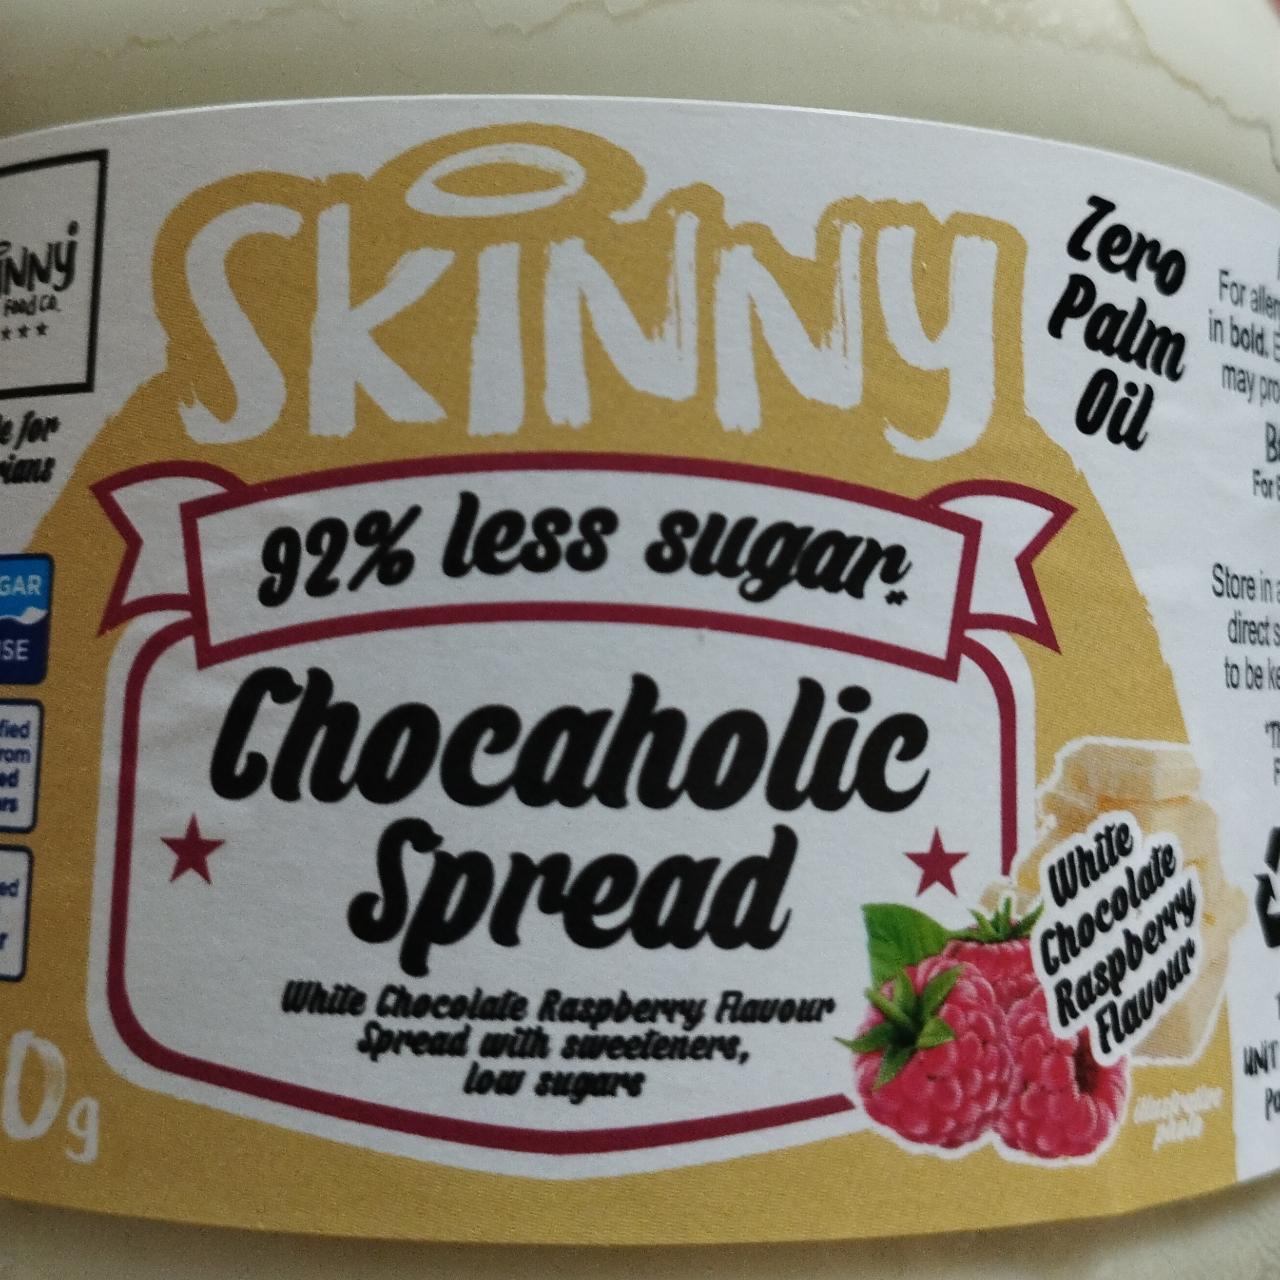 Fotografie - Skinny chocaholic spread White chocolate raspberry flavour The Skinny Food Co